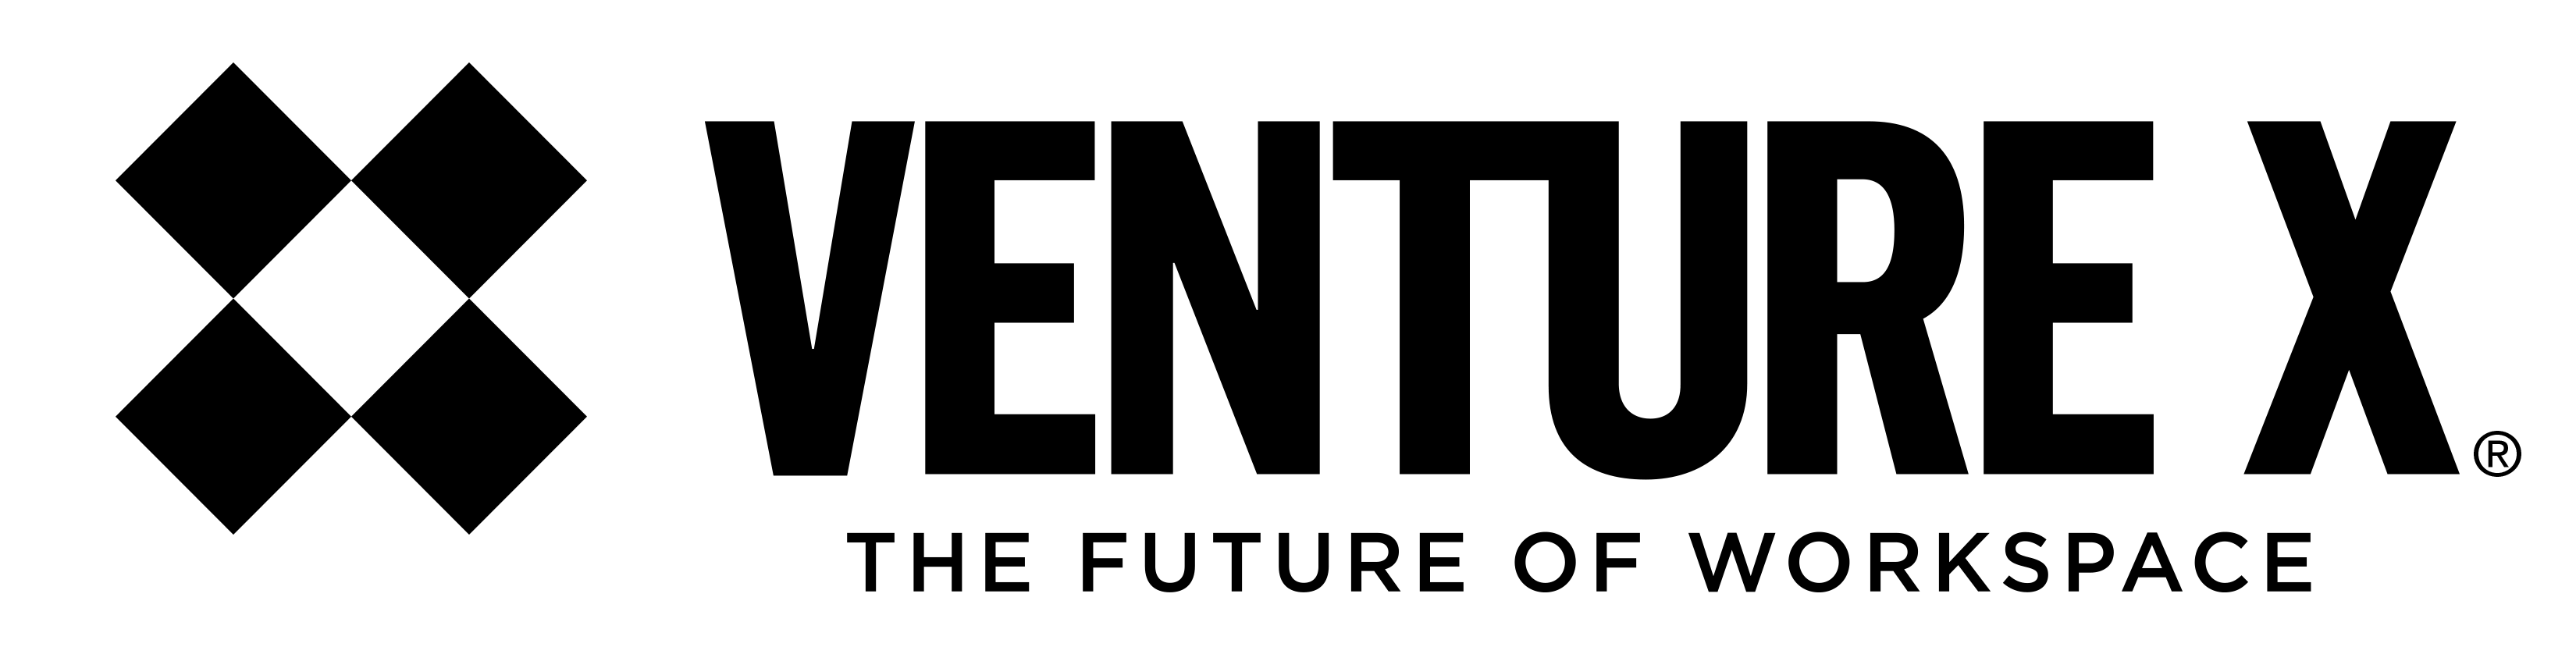 VTX_Logo_Horizontal_Black